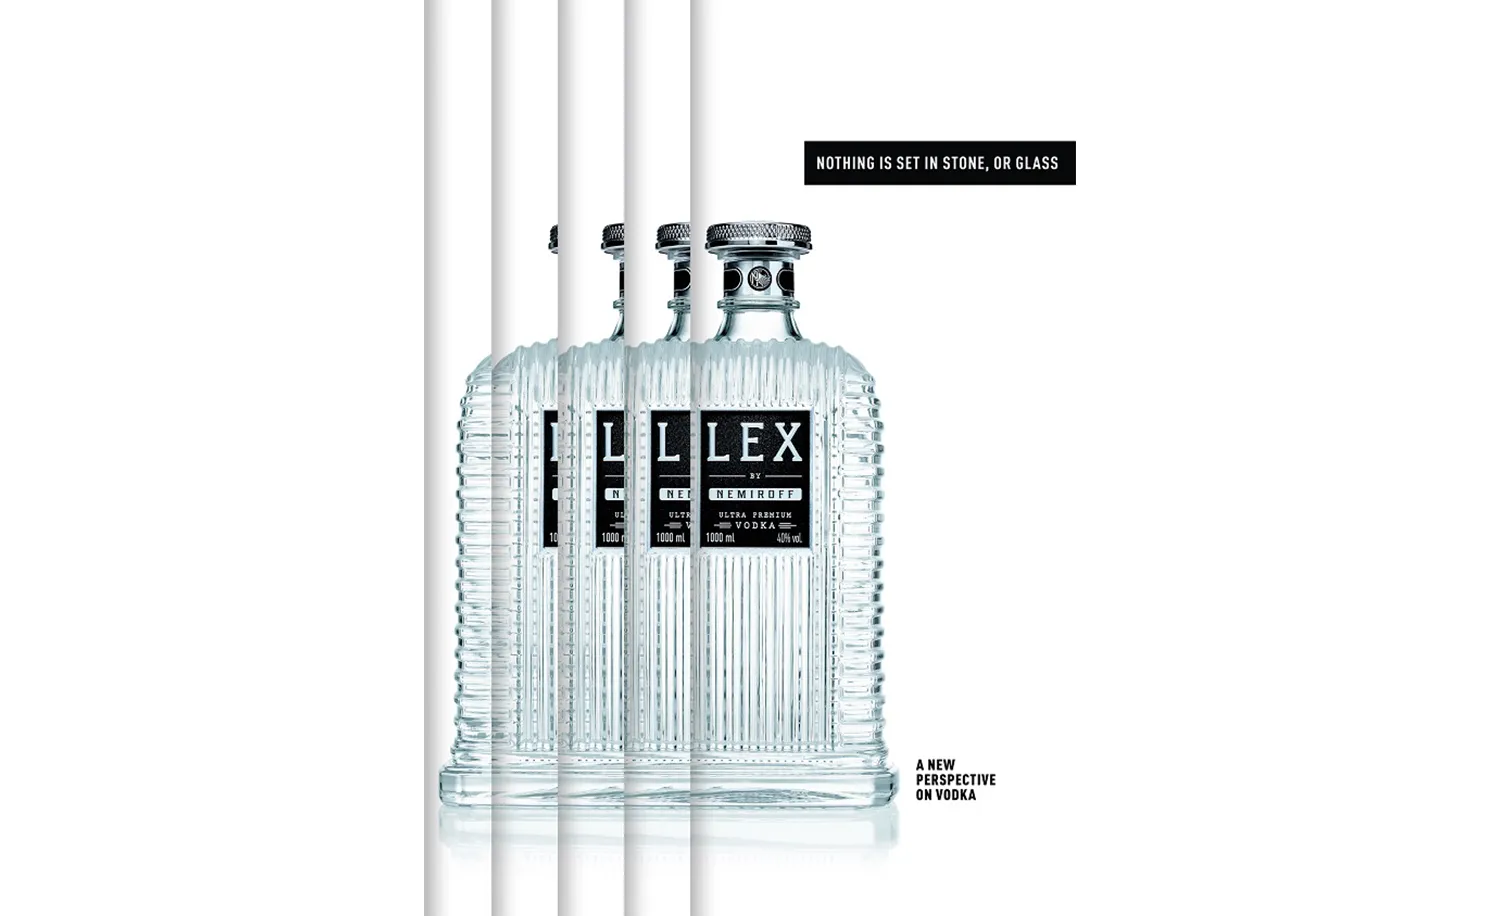 Lex Vodka by Nemiroff